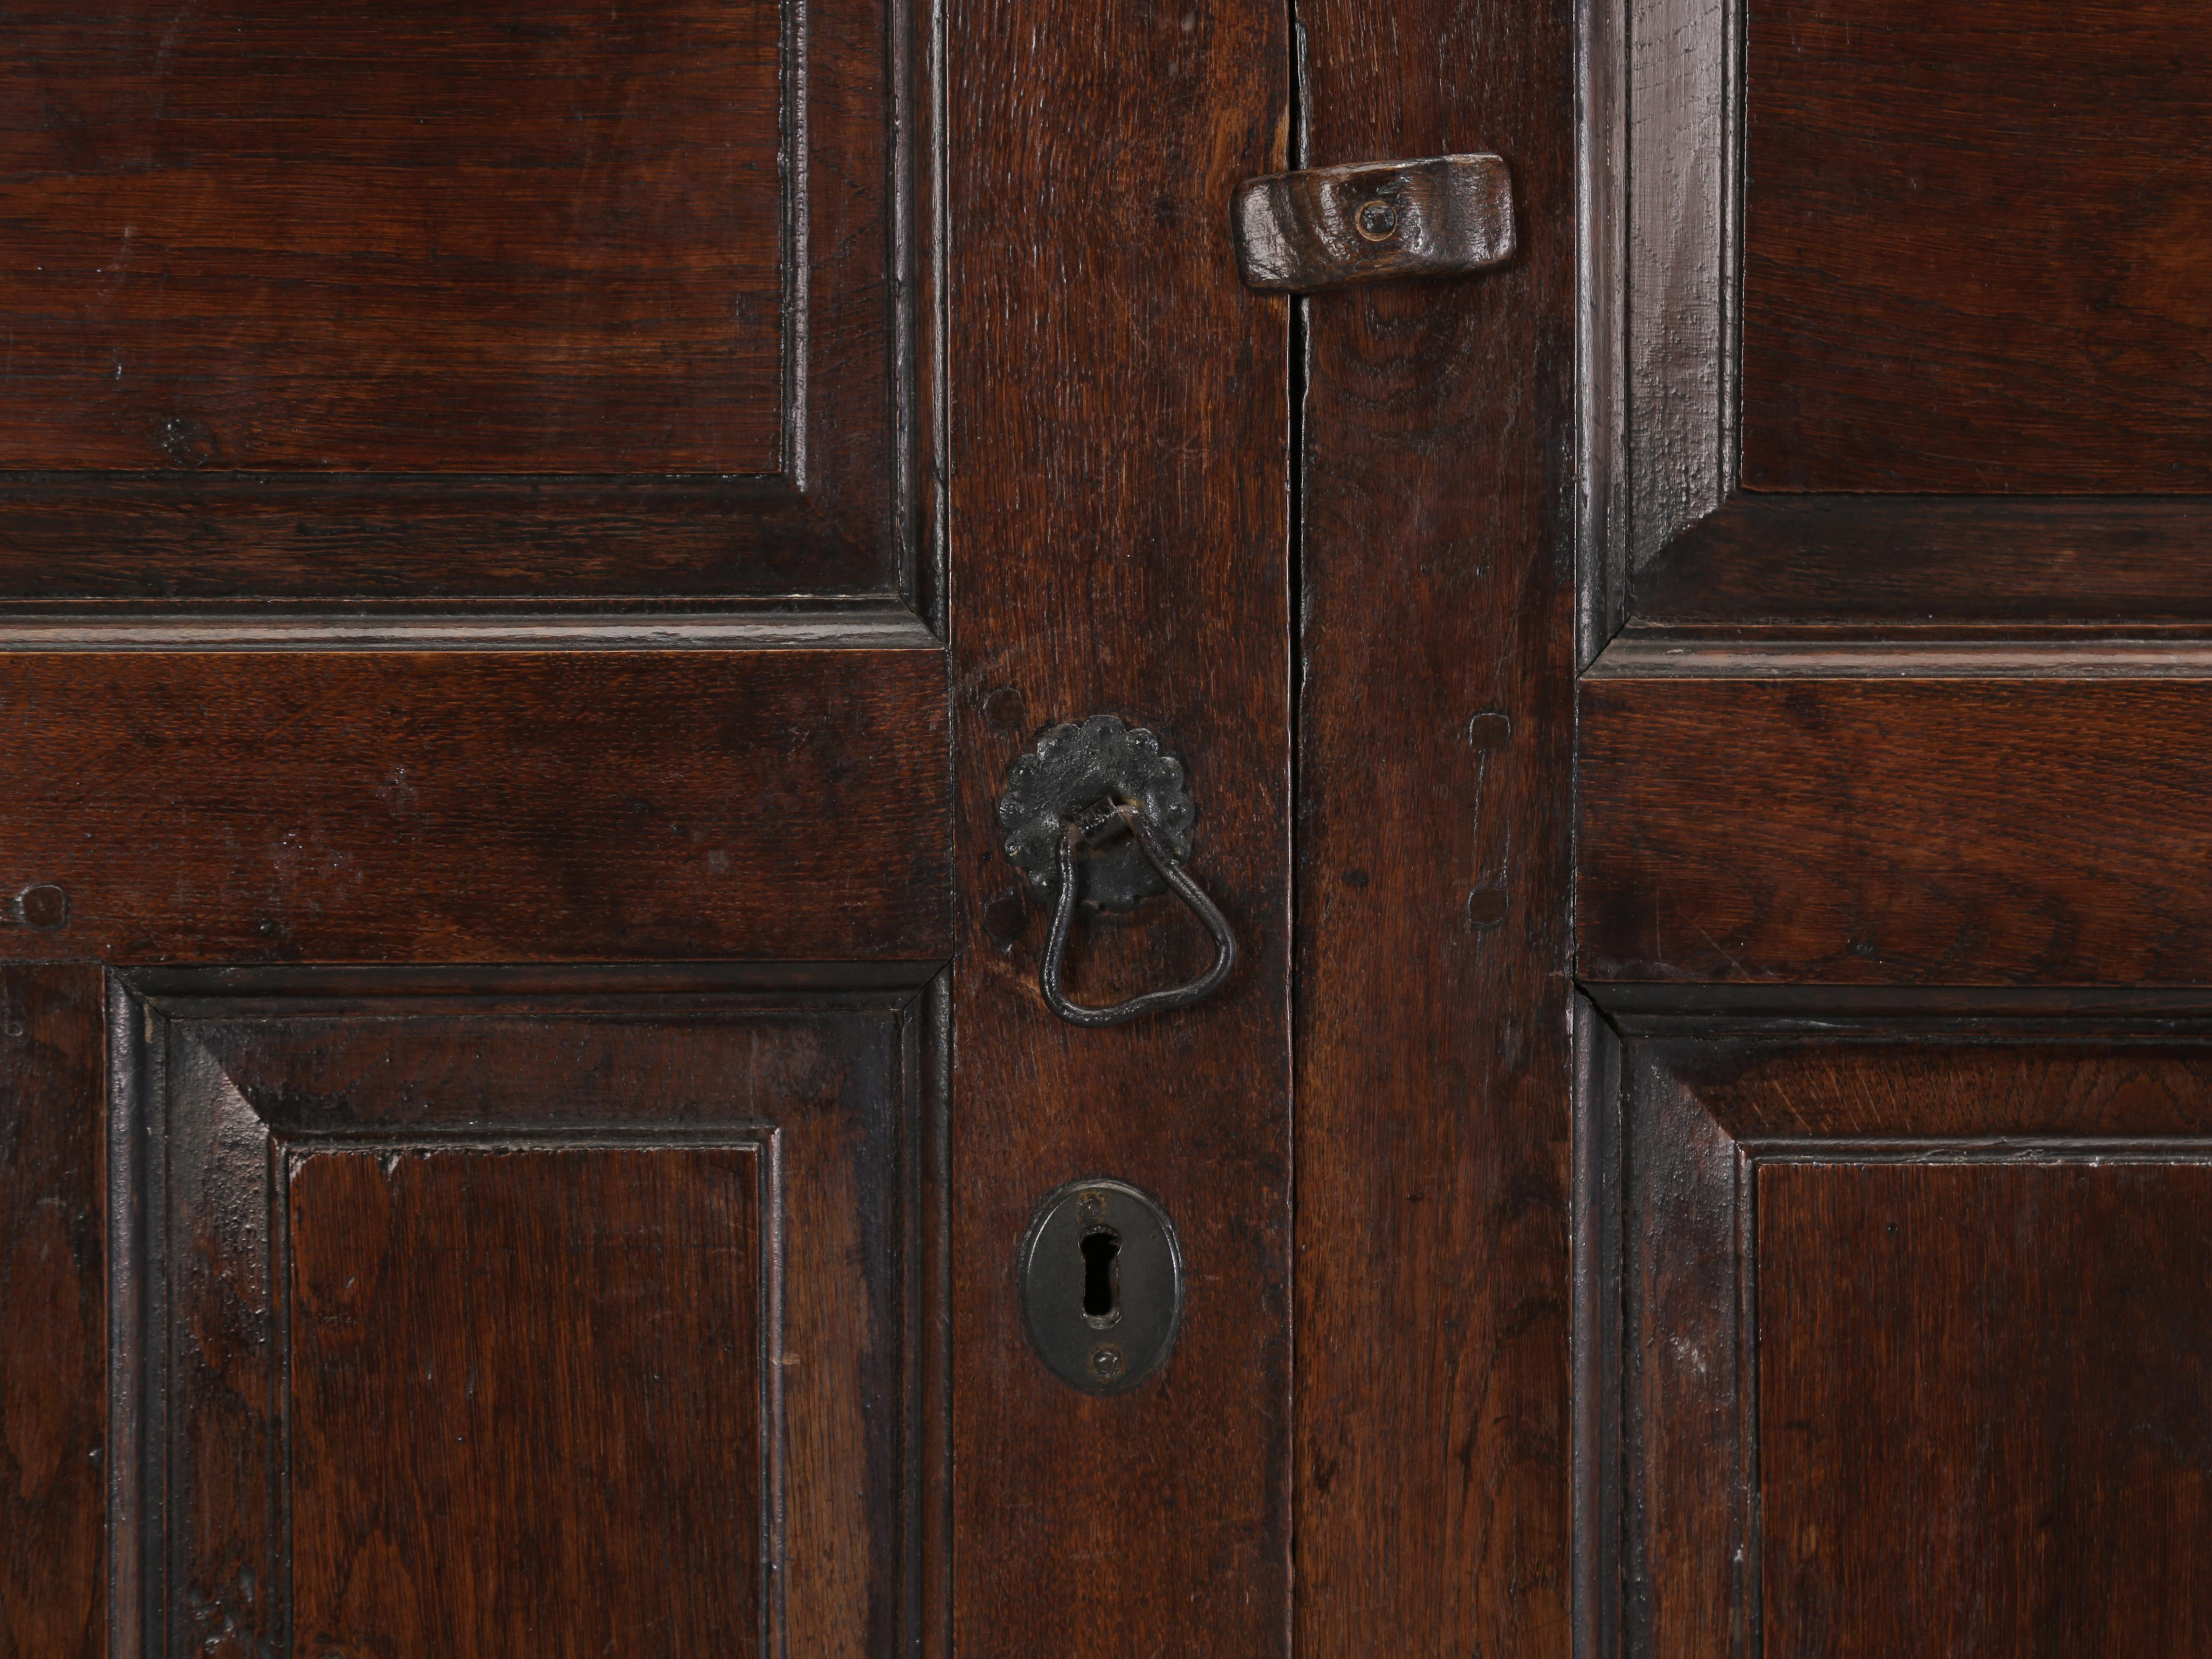 Antique English Oak Baker's Cupboard or Back Hall Coat Closet c1700-40 Original  For Sale 1